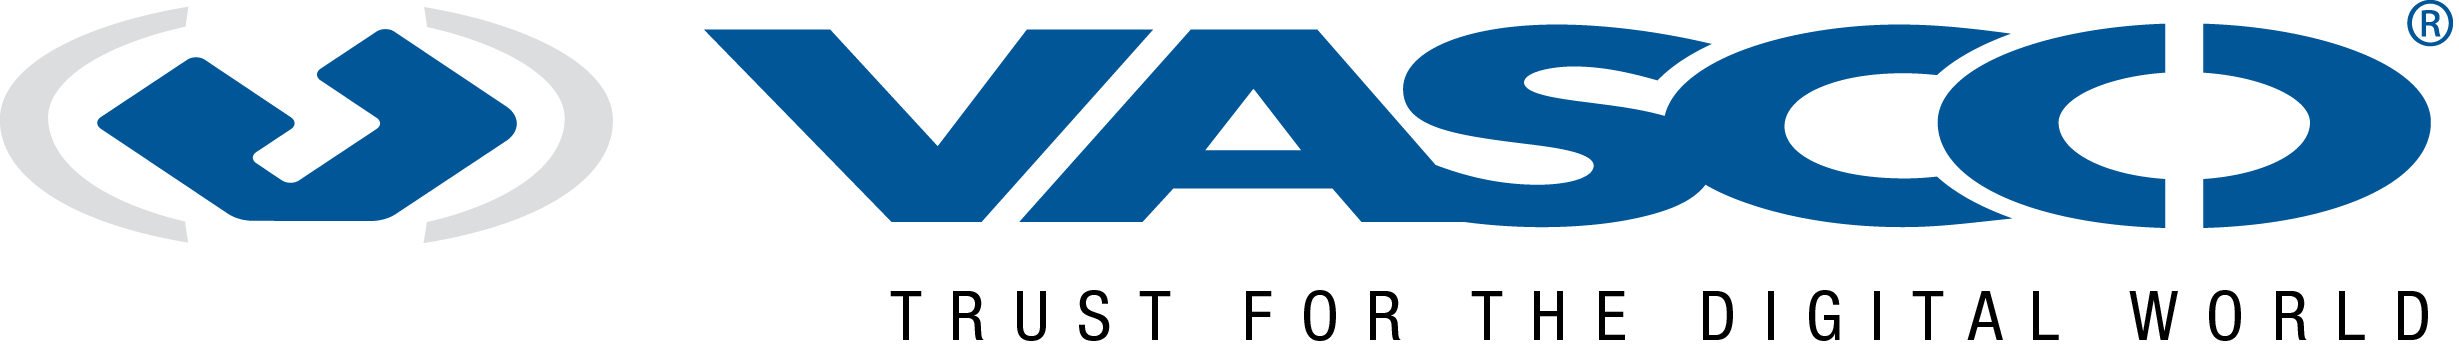 Vasco Data Security Logo photo - 1